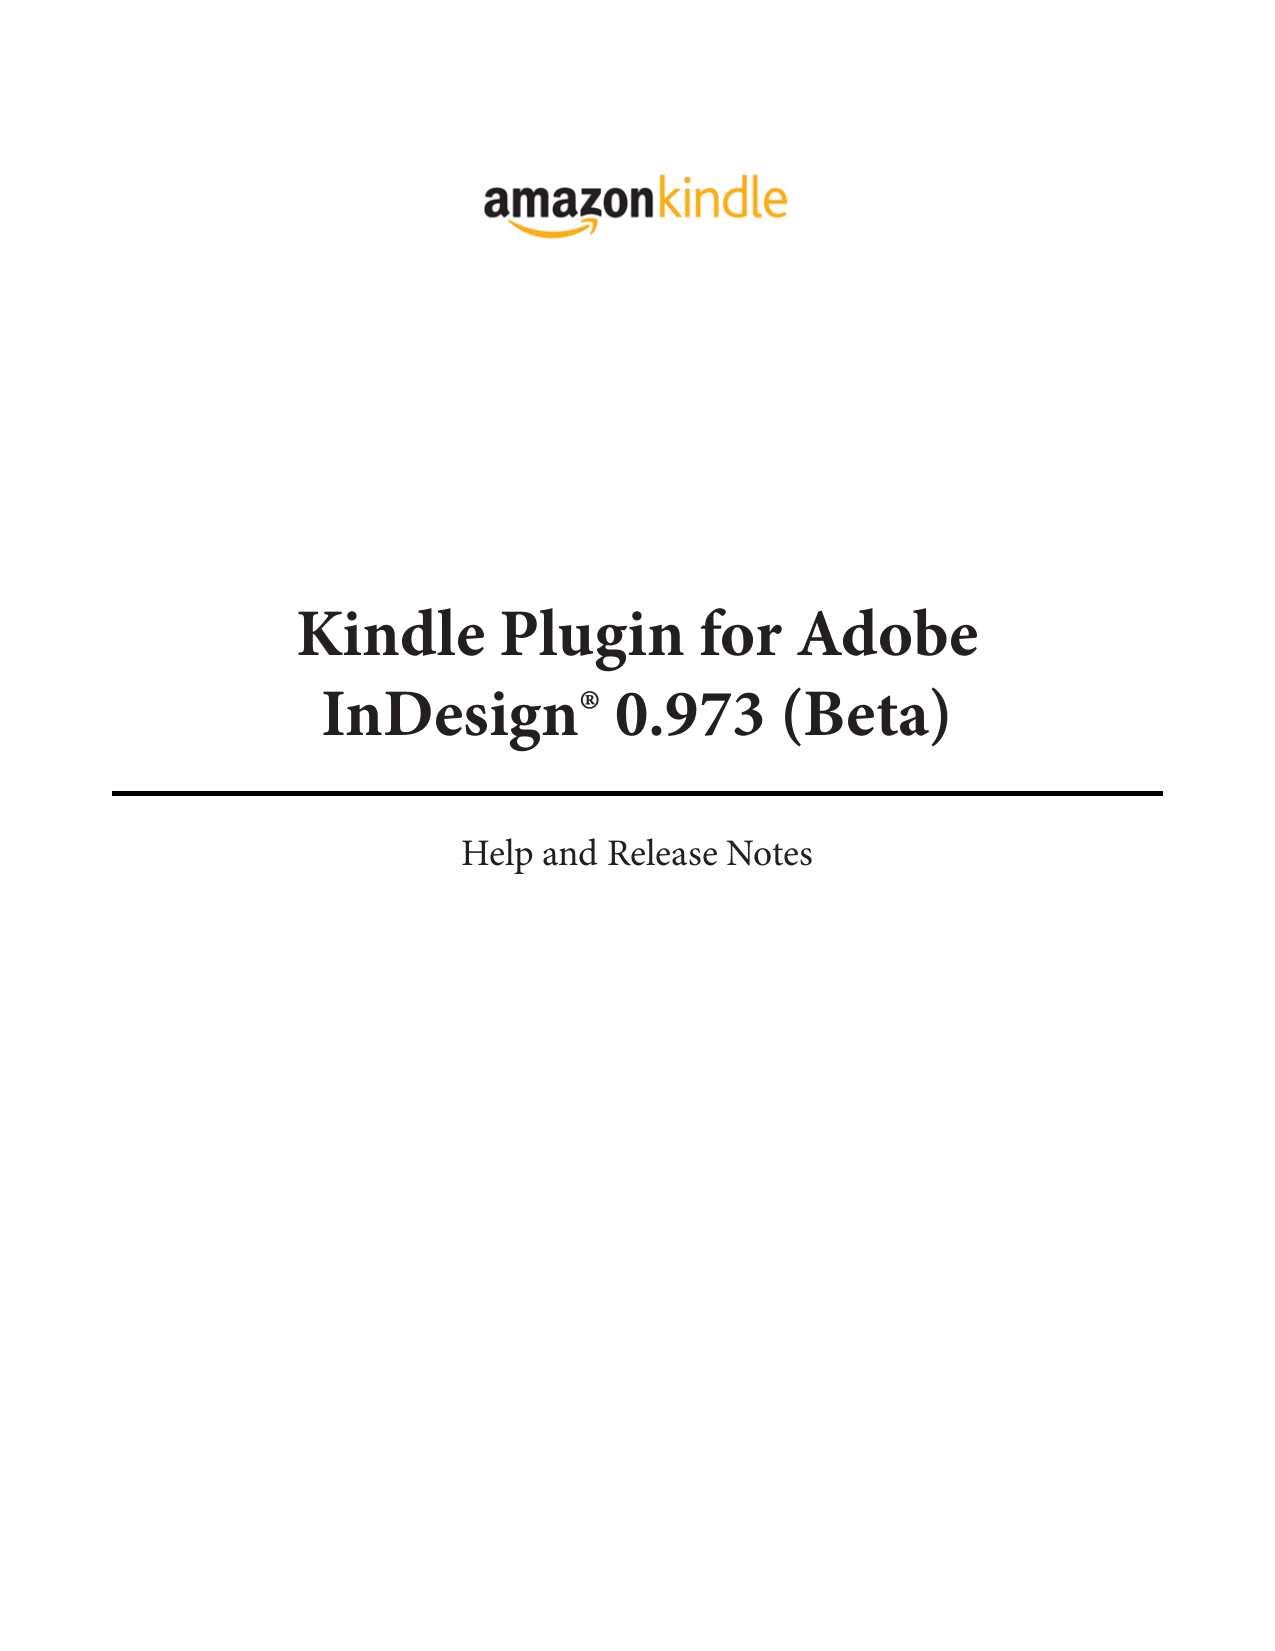 upgrade plugins adobe indesign cs5